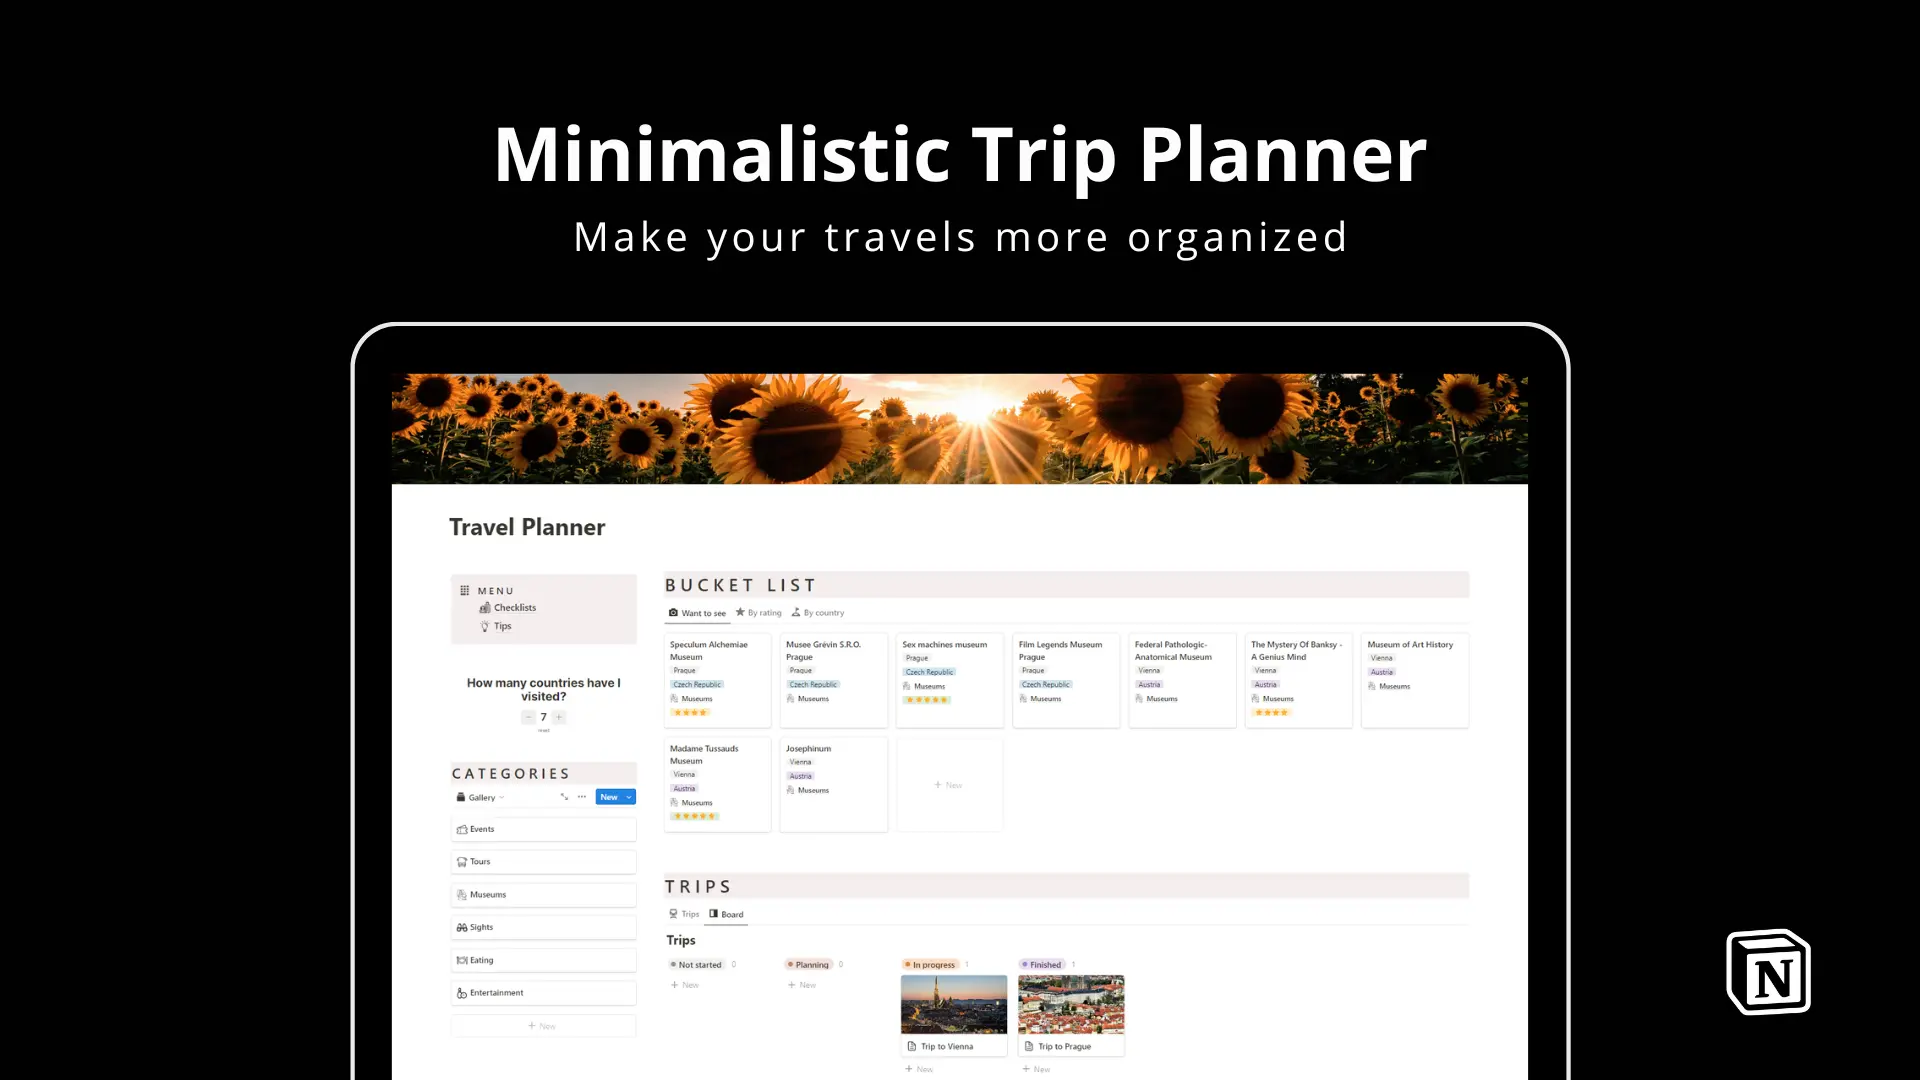 Minimalistic Trip Planner image